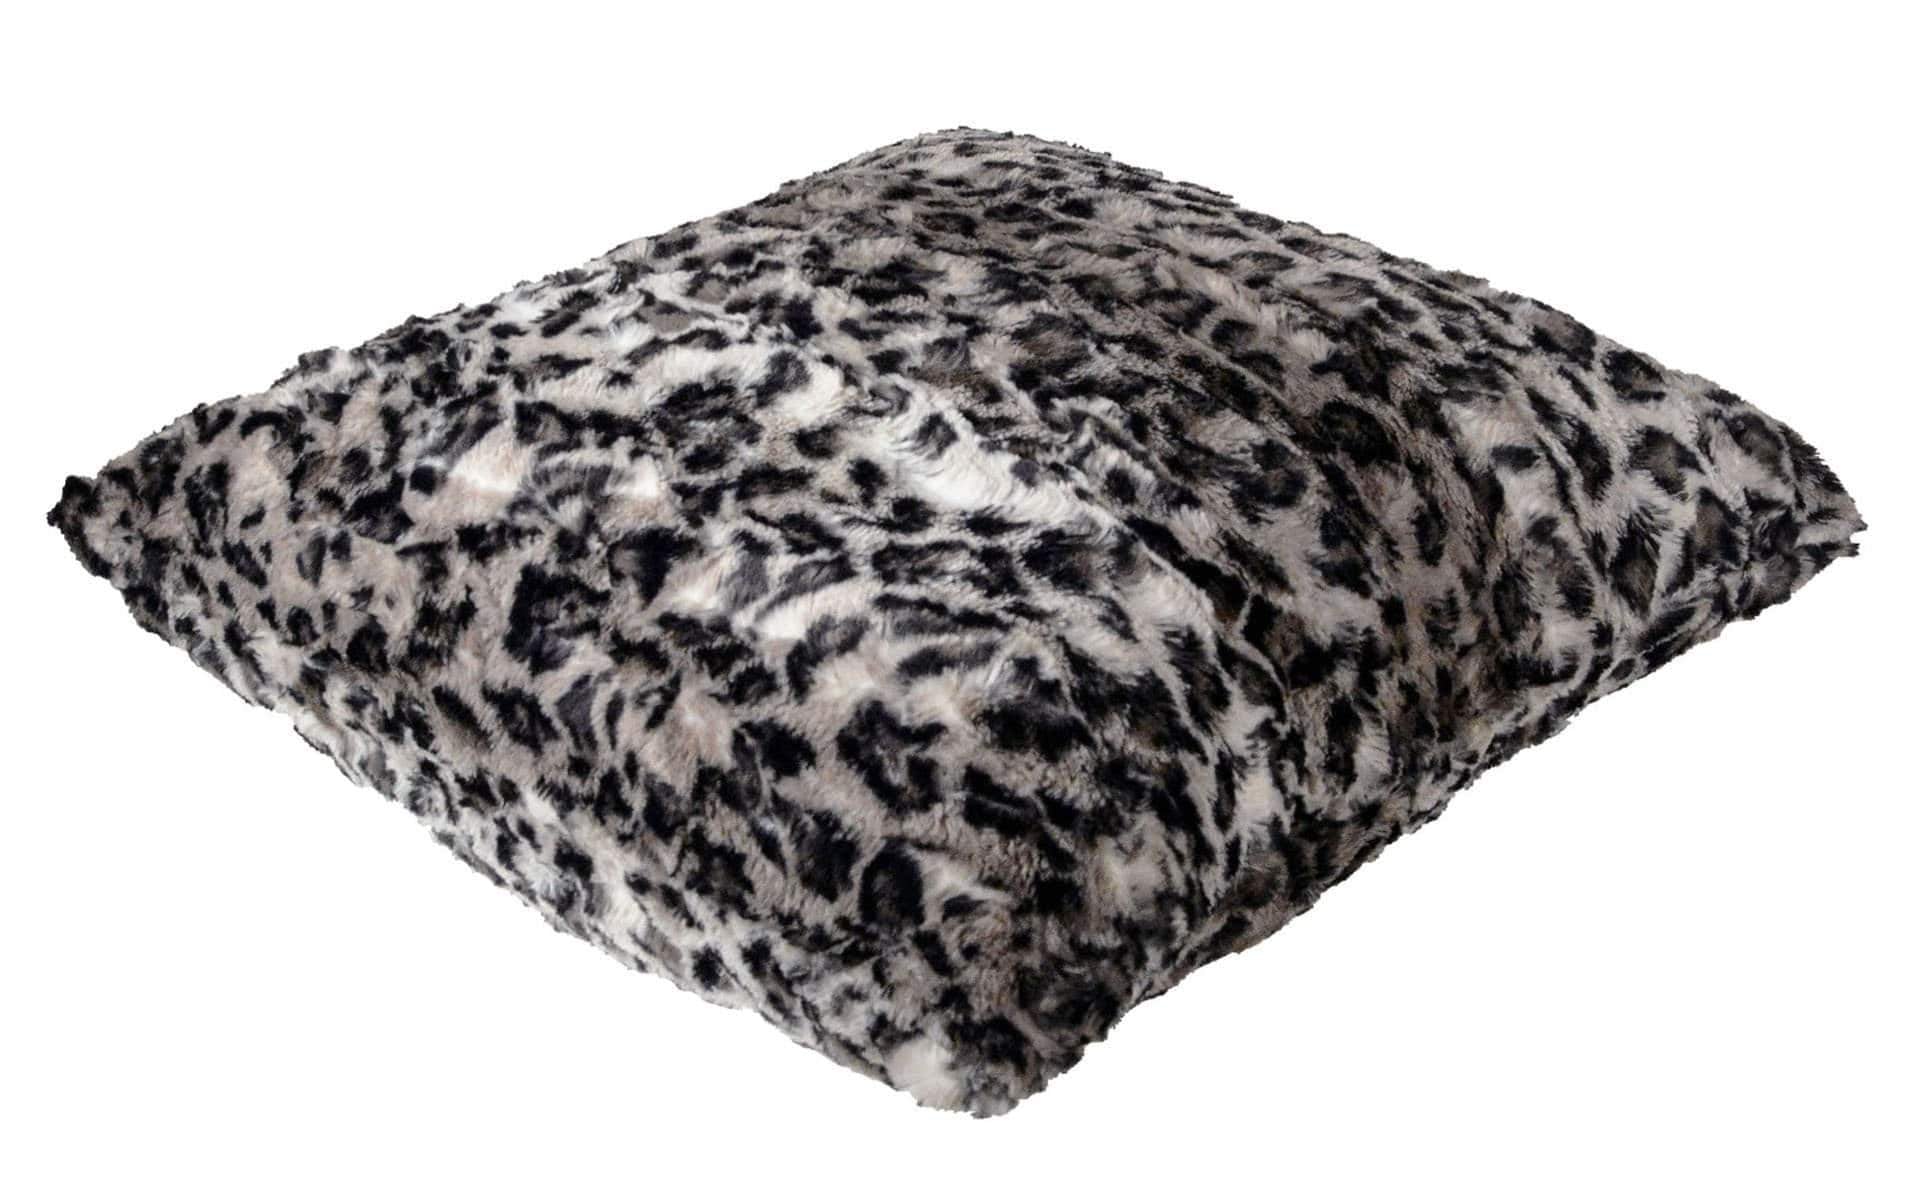 Pillow Shams in Savannah Cat; Animal print rays and creams | Luxury Faux Fur decorative pillow blacks, g | Handmade by Pandemonium Millinery